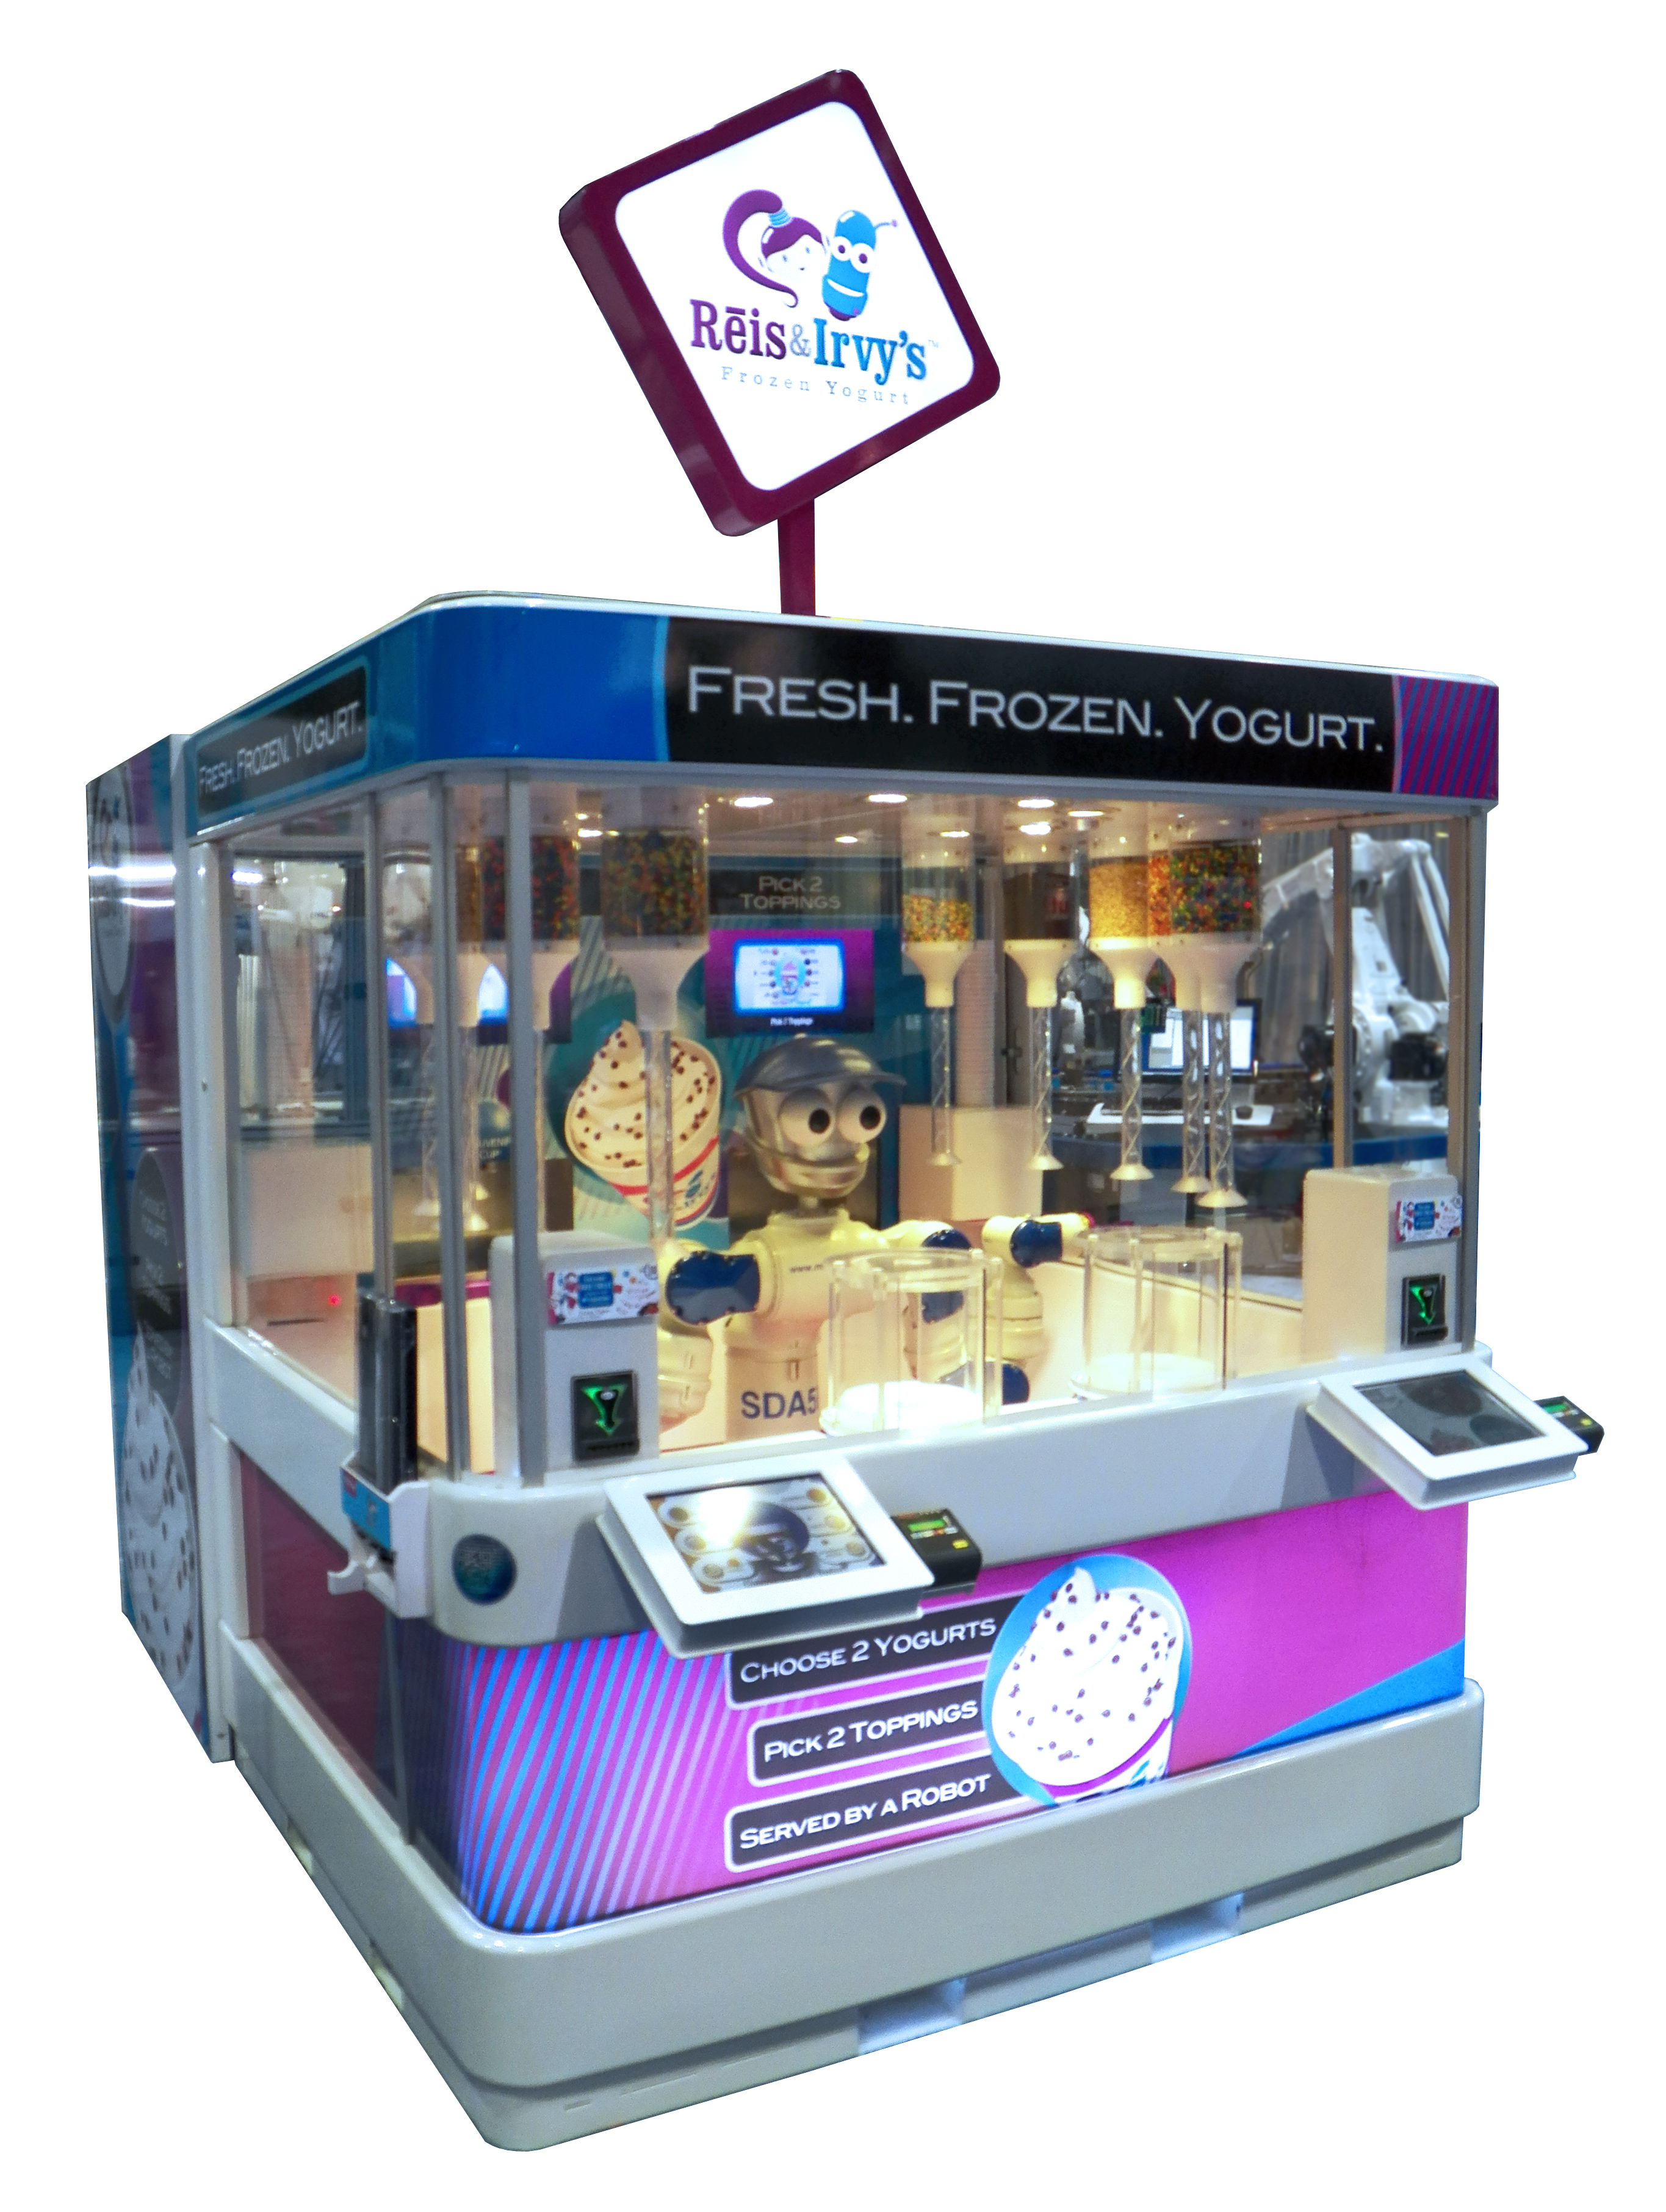 Yaskawa Motoman Partners with Robofusion to Deliver Reis and Irvy’s Frozen Yogurt Factory Robotic Kiosks